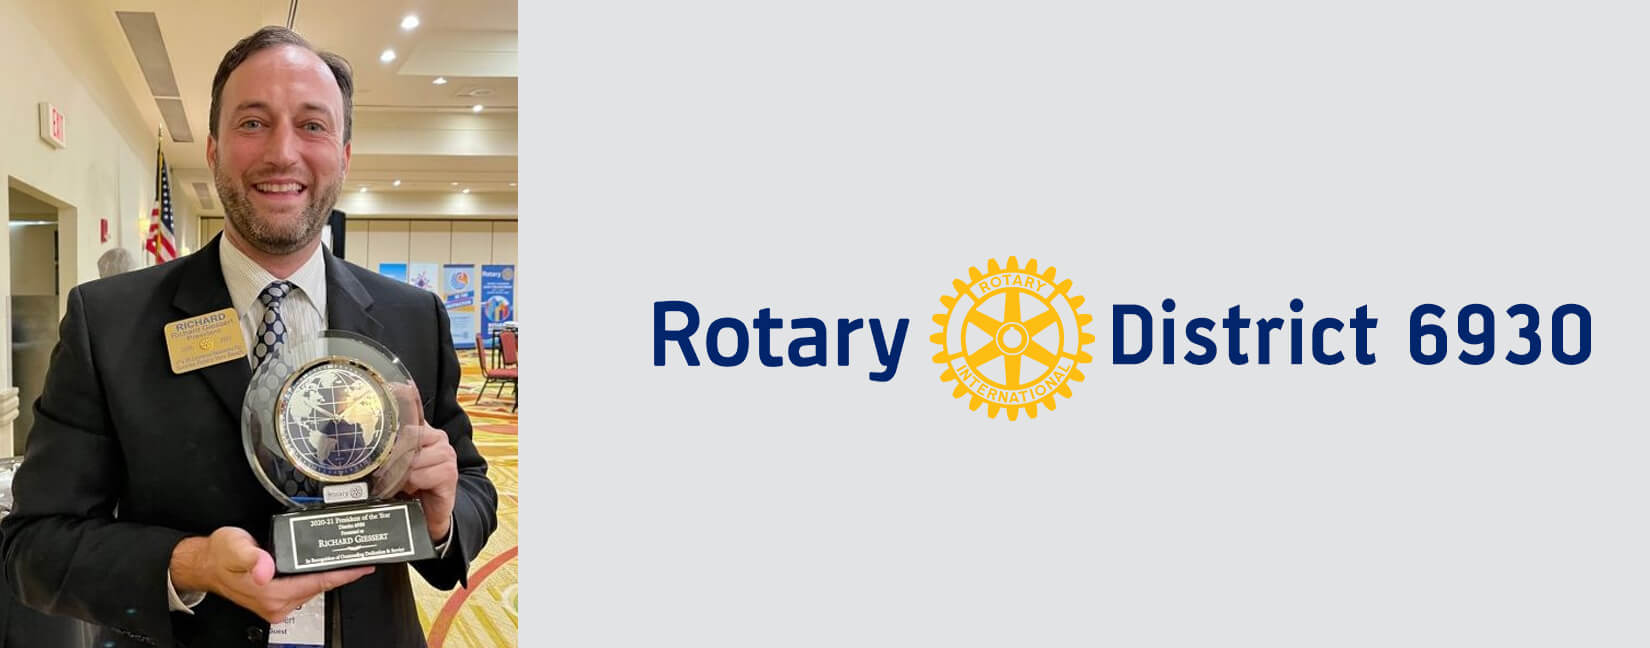 Richard Geissert and Rotary Club logo